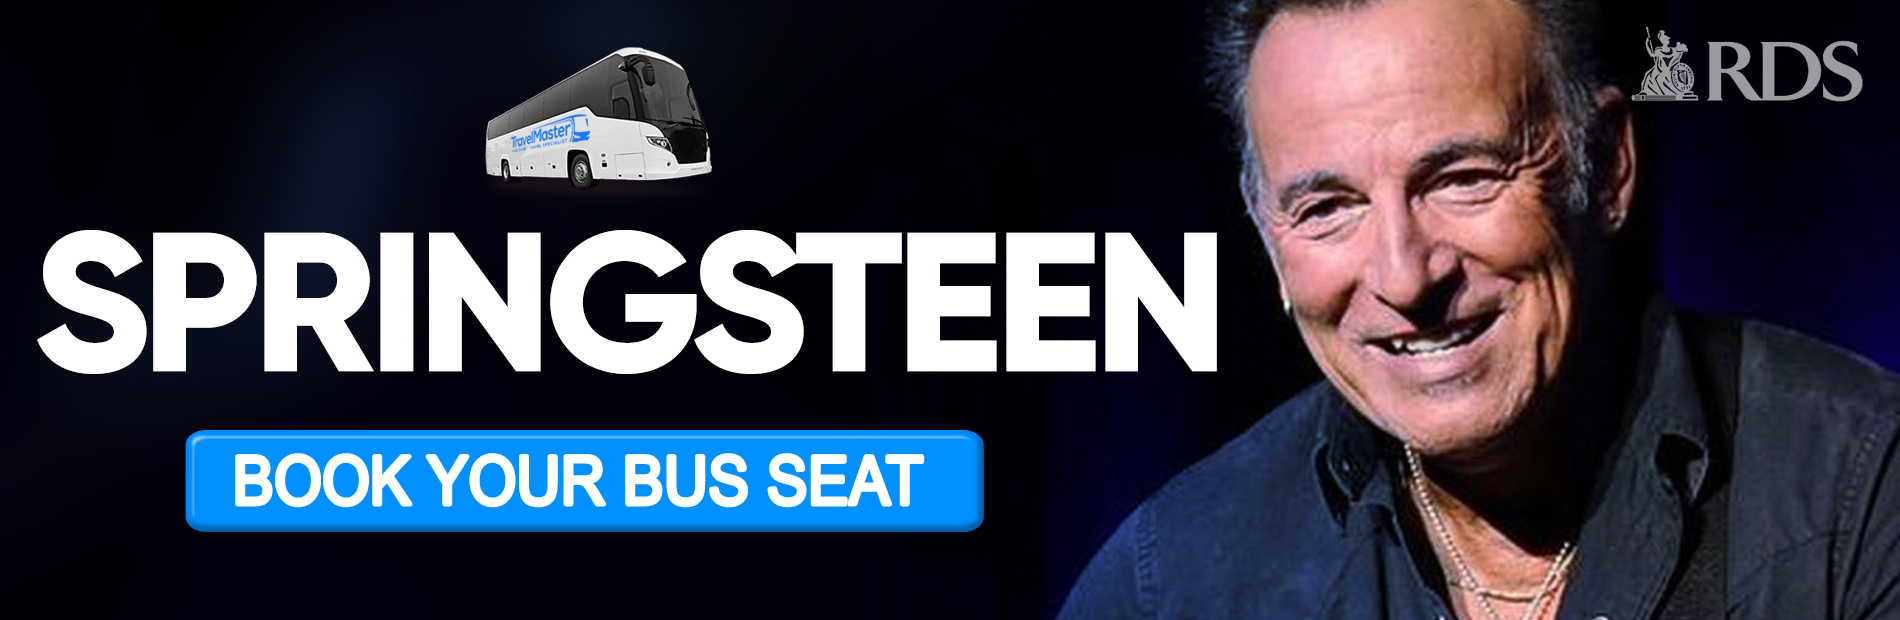 Bus to Bruce Springsteen estreet band Dublin 2023 Banner